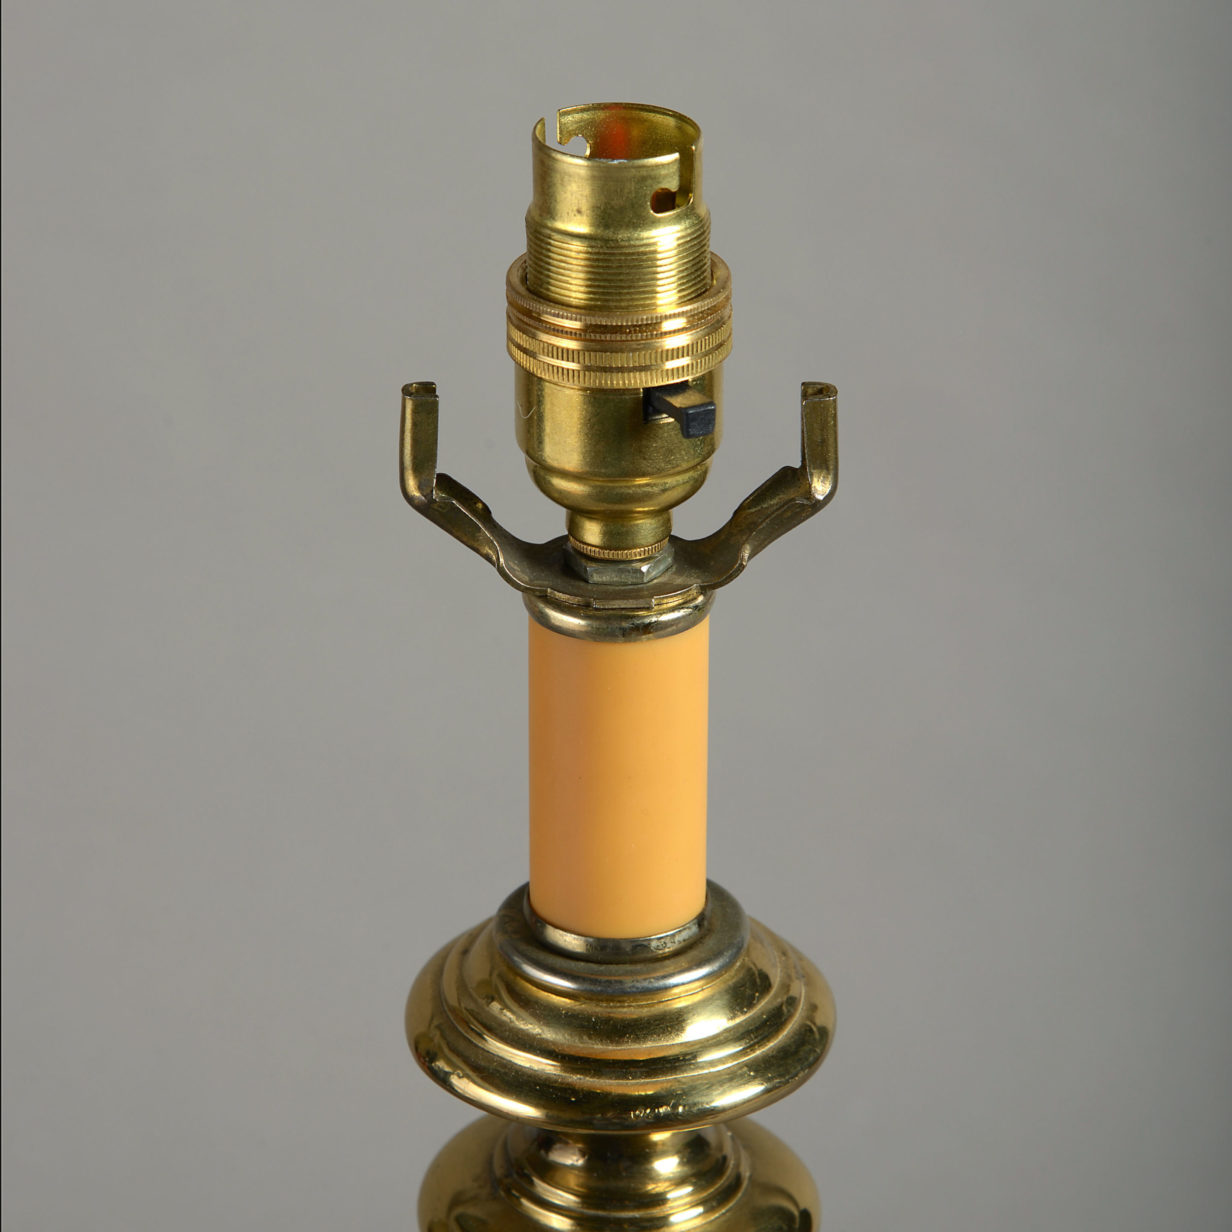 Mid 20th century brass table lamp